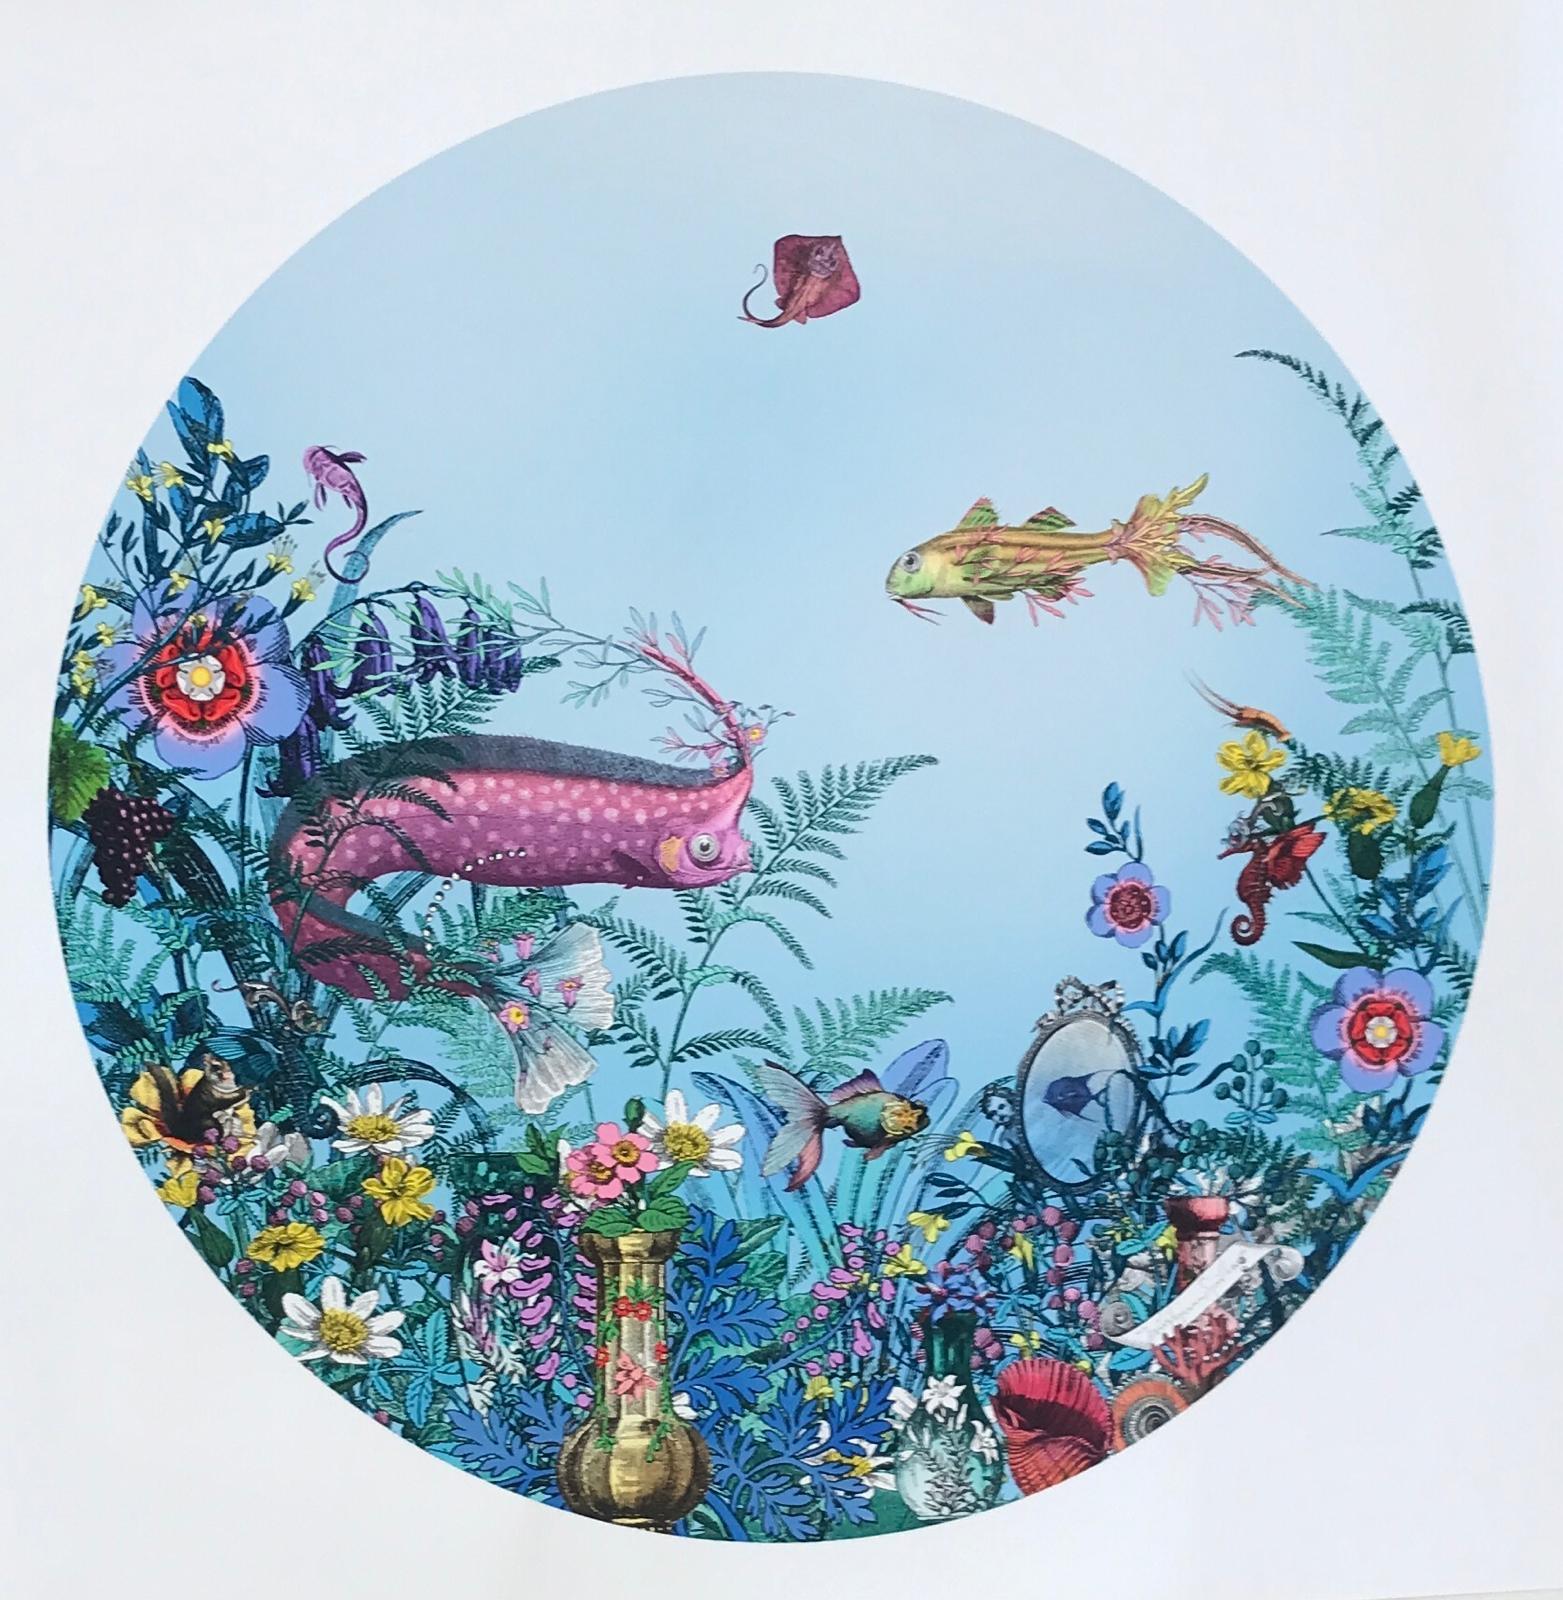 Kristjana Williams Animal Print – Fiskur Ne Thari - Rundes Meer, geboren, Giclee-Tintendruck, Fisch, Ozean, Fantasie